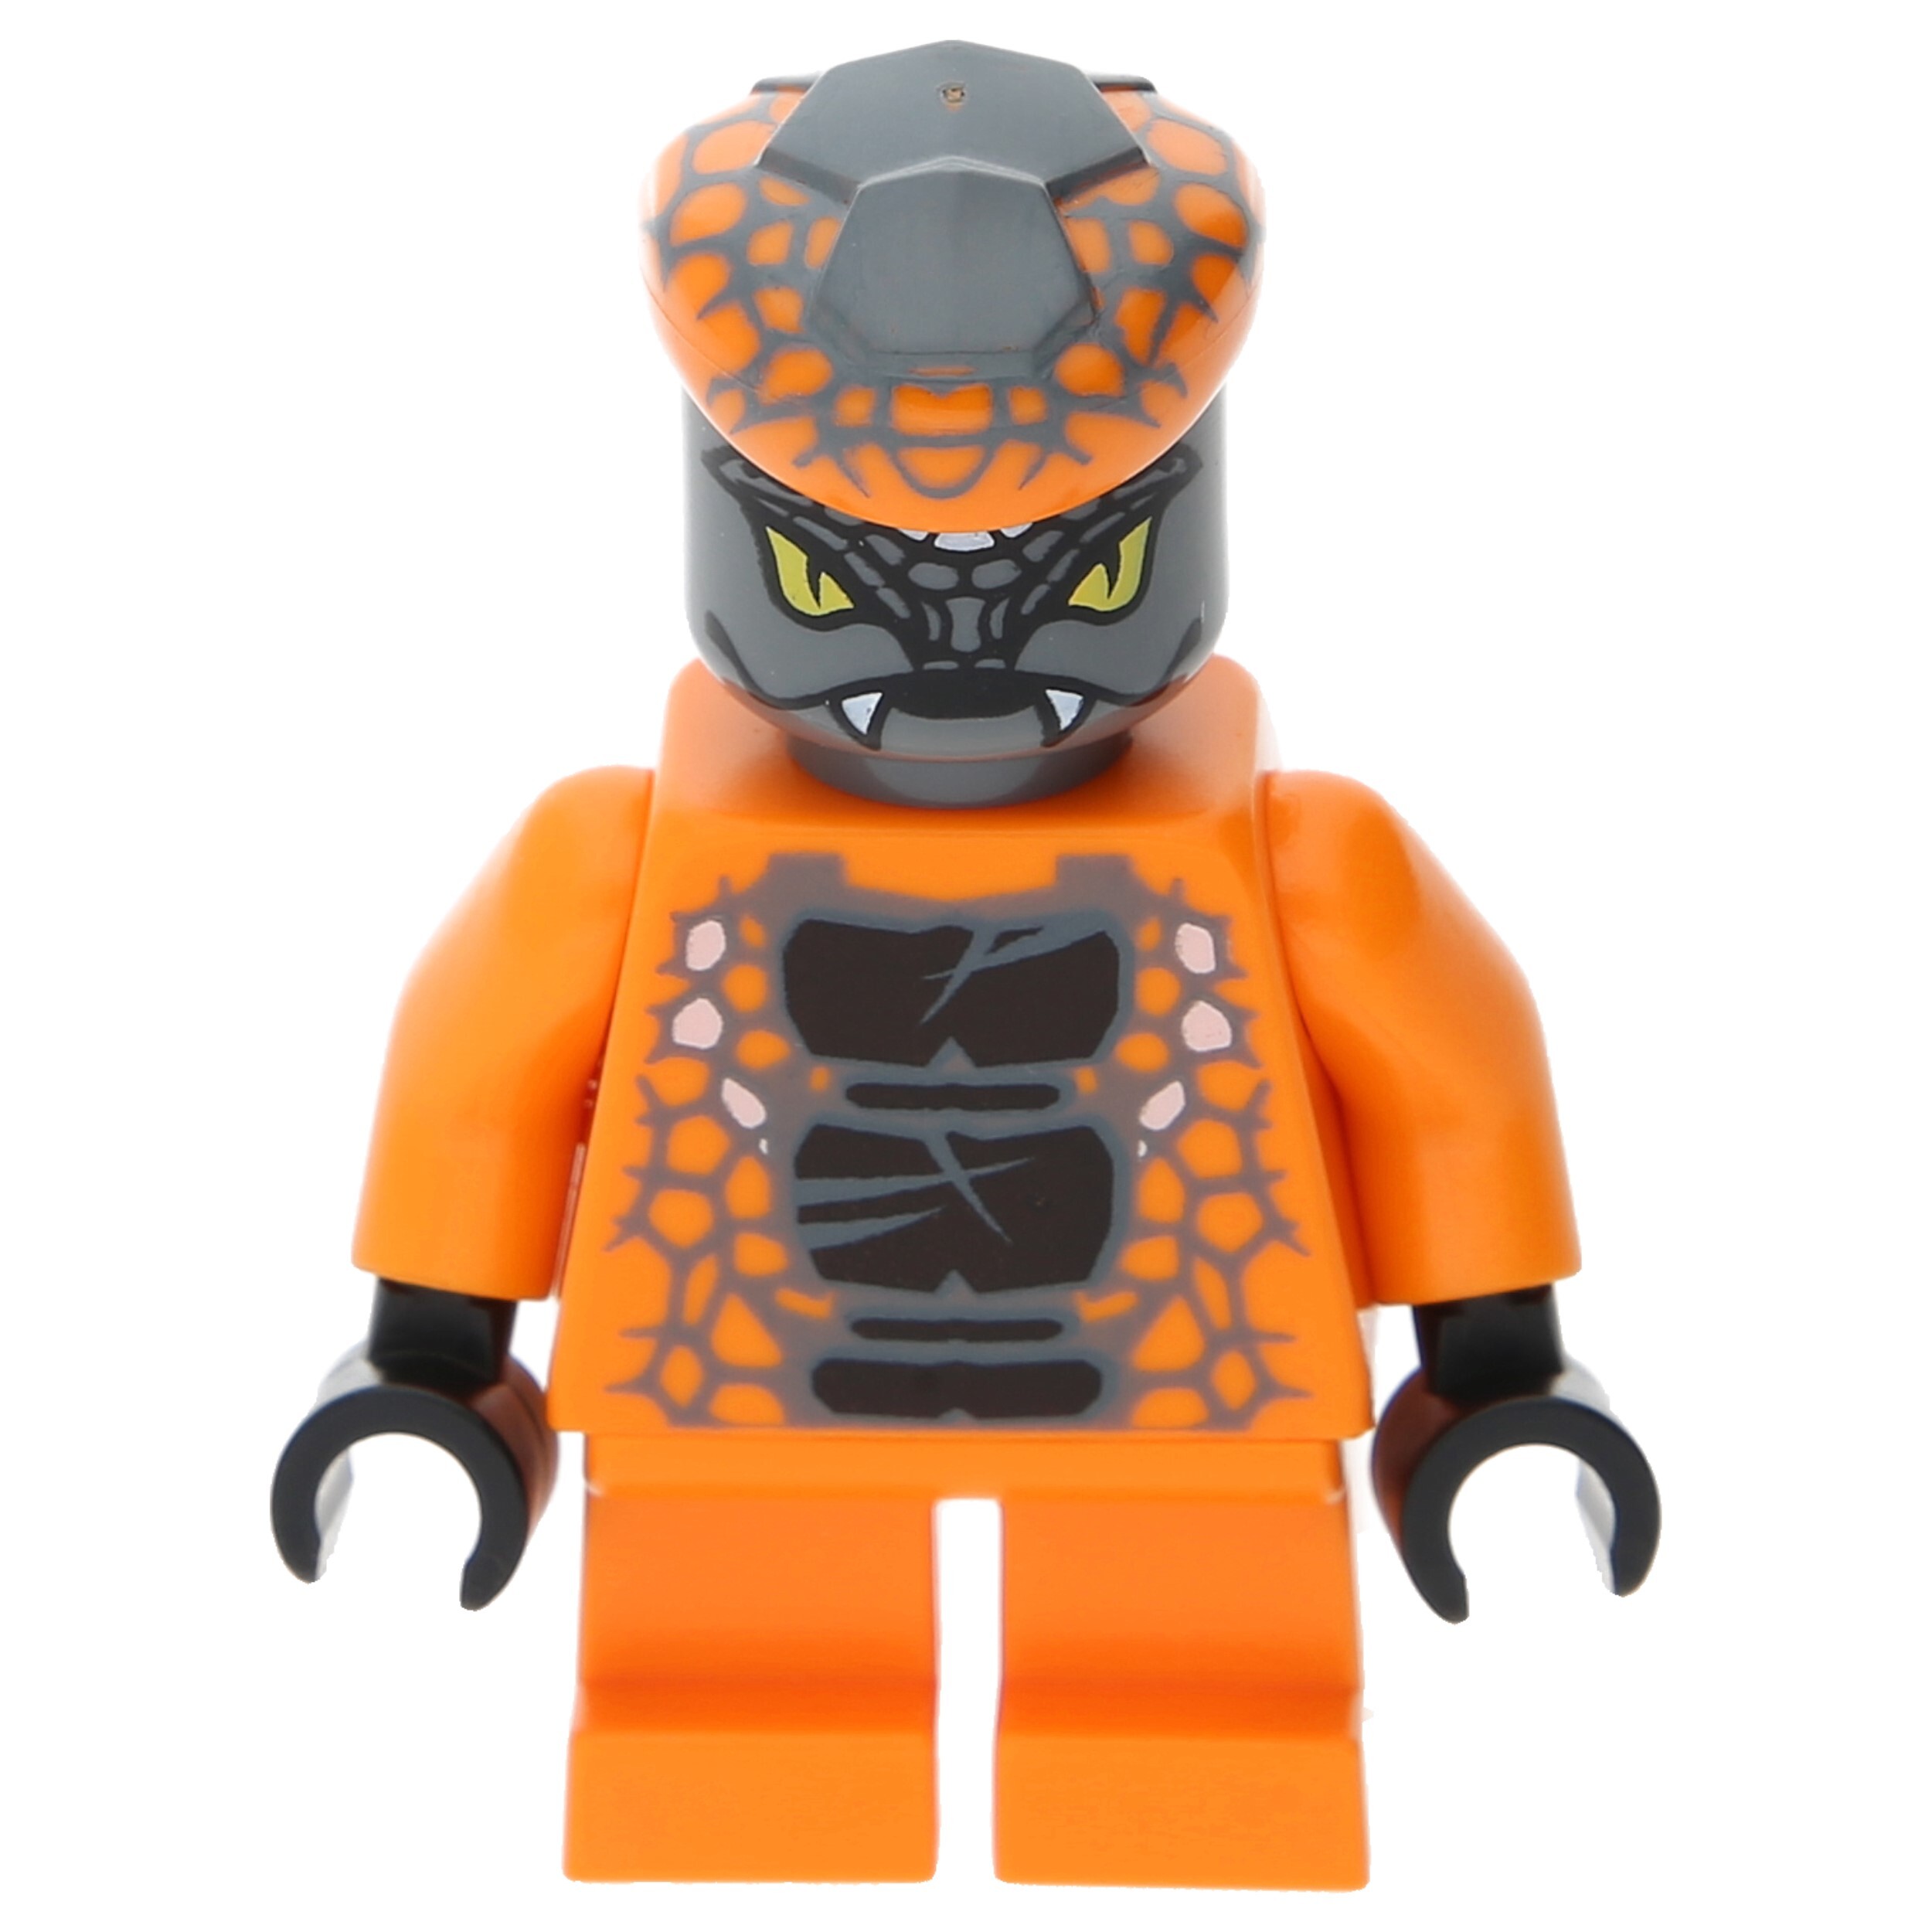 LEGO Ninjago: Snike